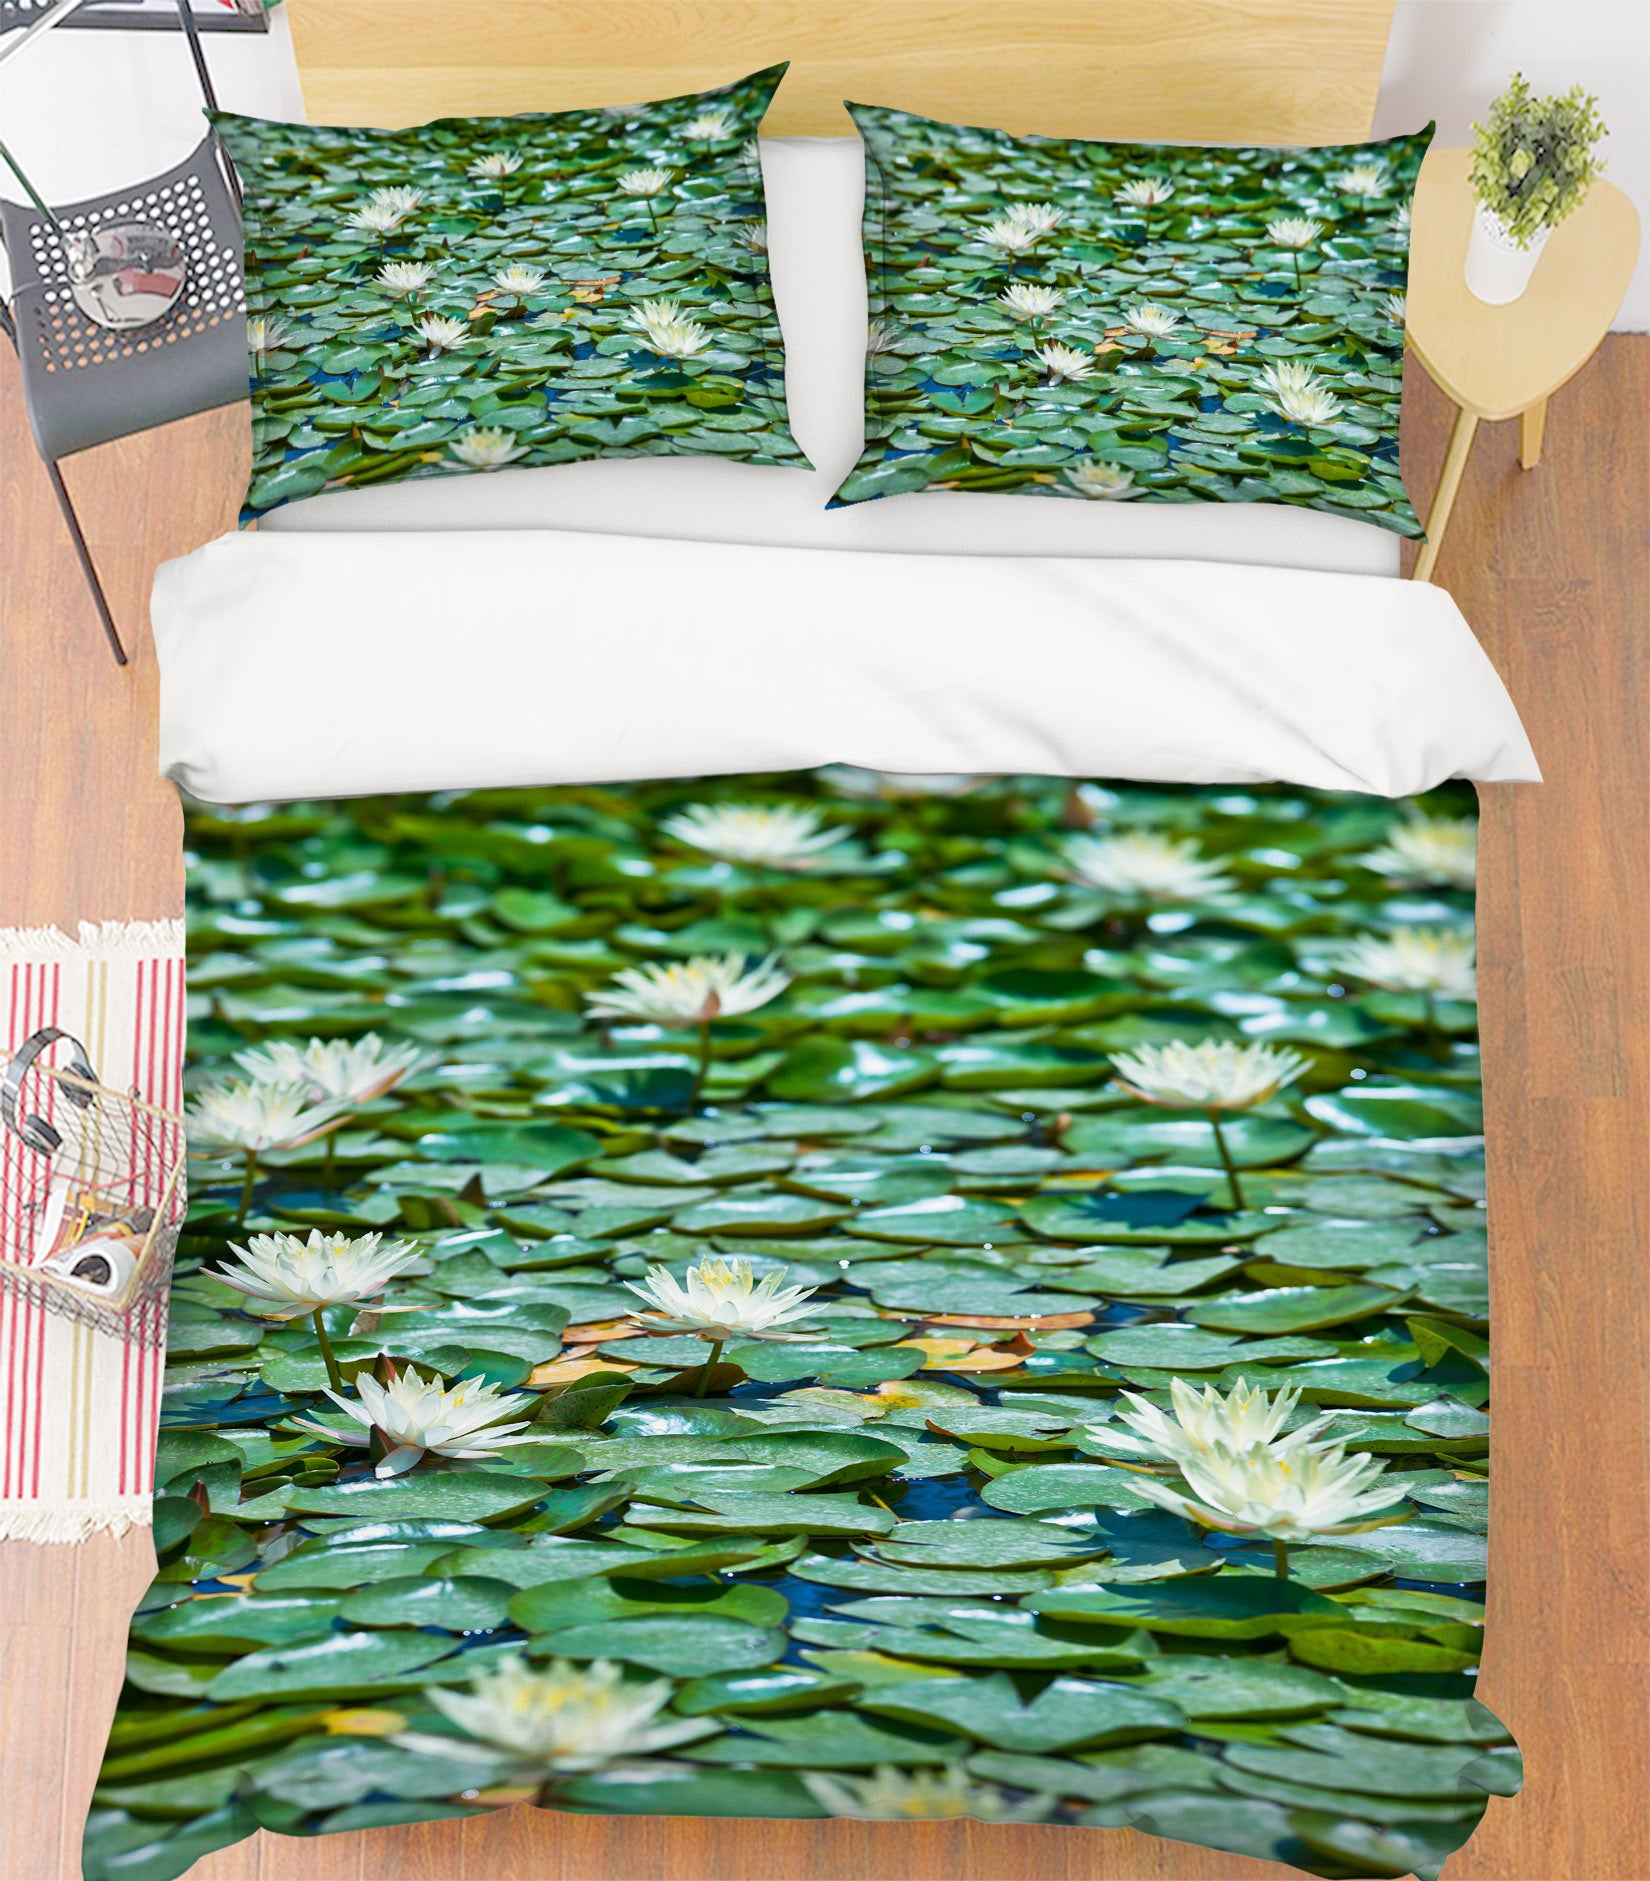 3D Lotus Pond 7110 Assaf Frank Bedding Bed Pillowcases Quilt Cover Duvet Cover